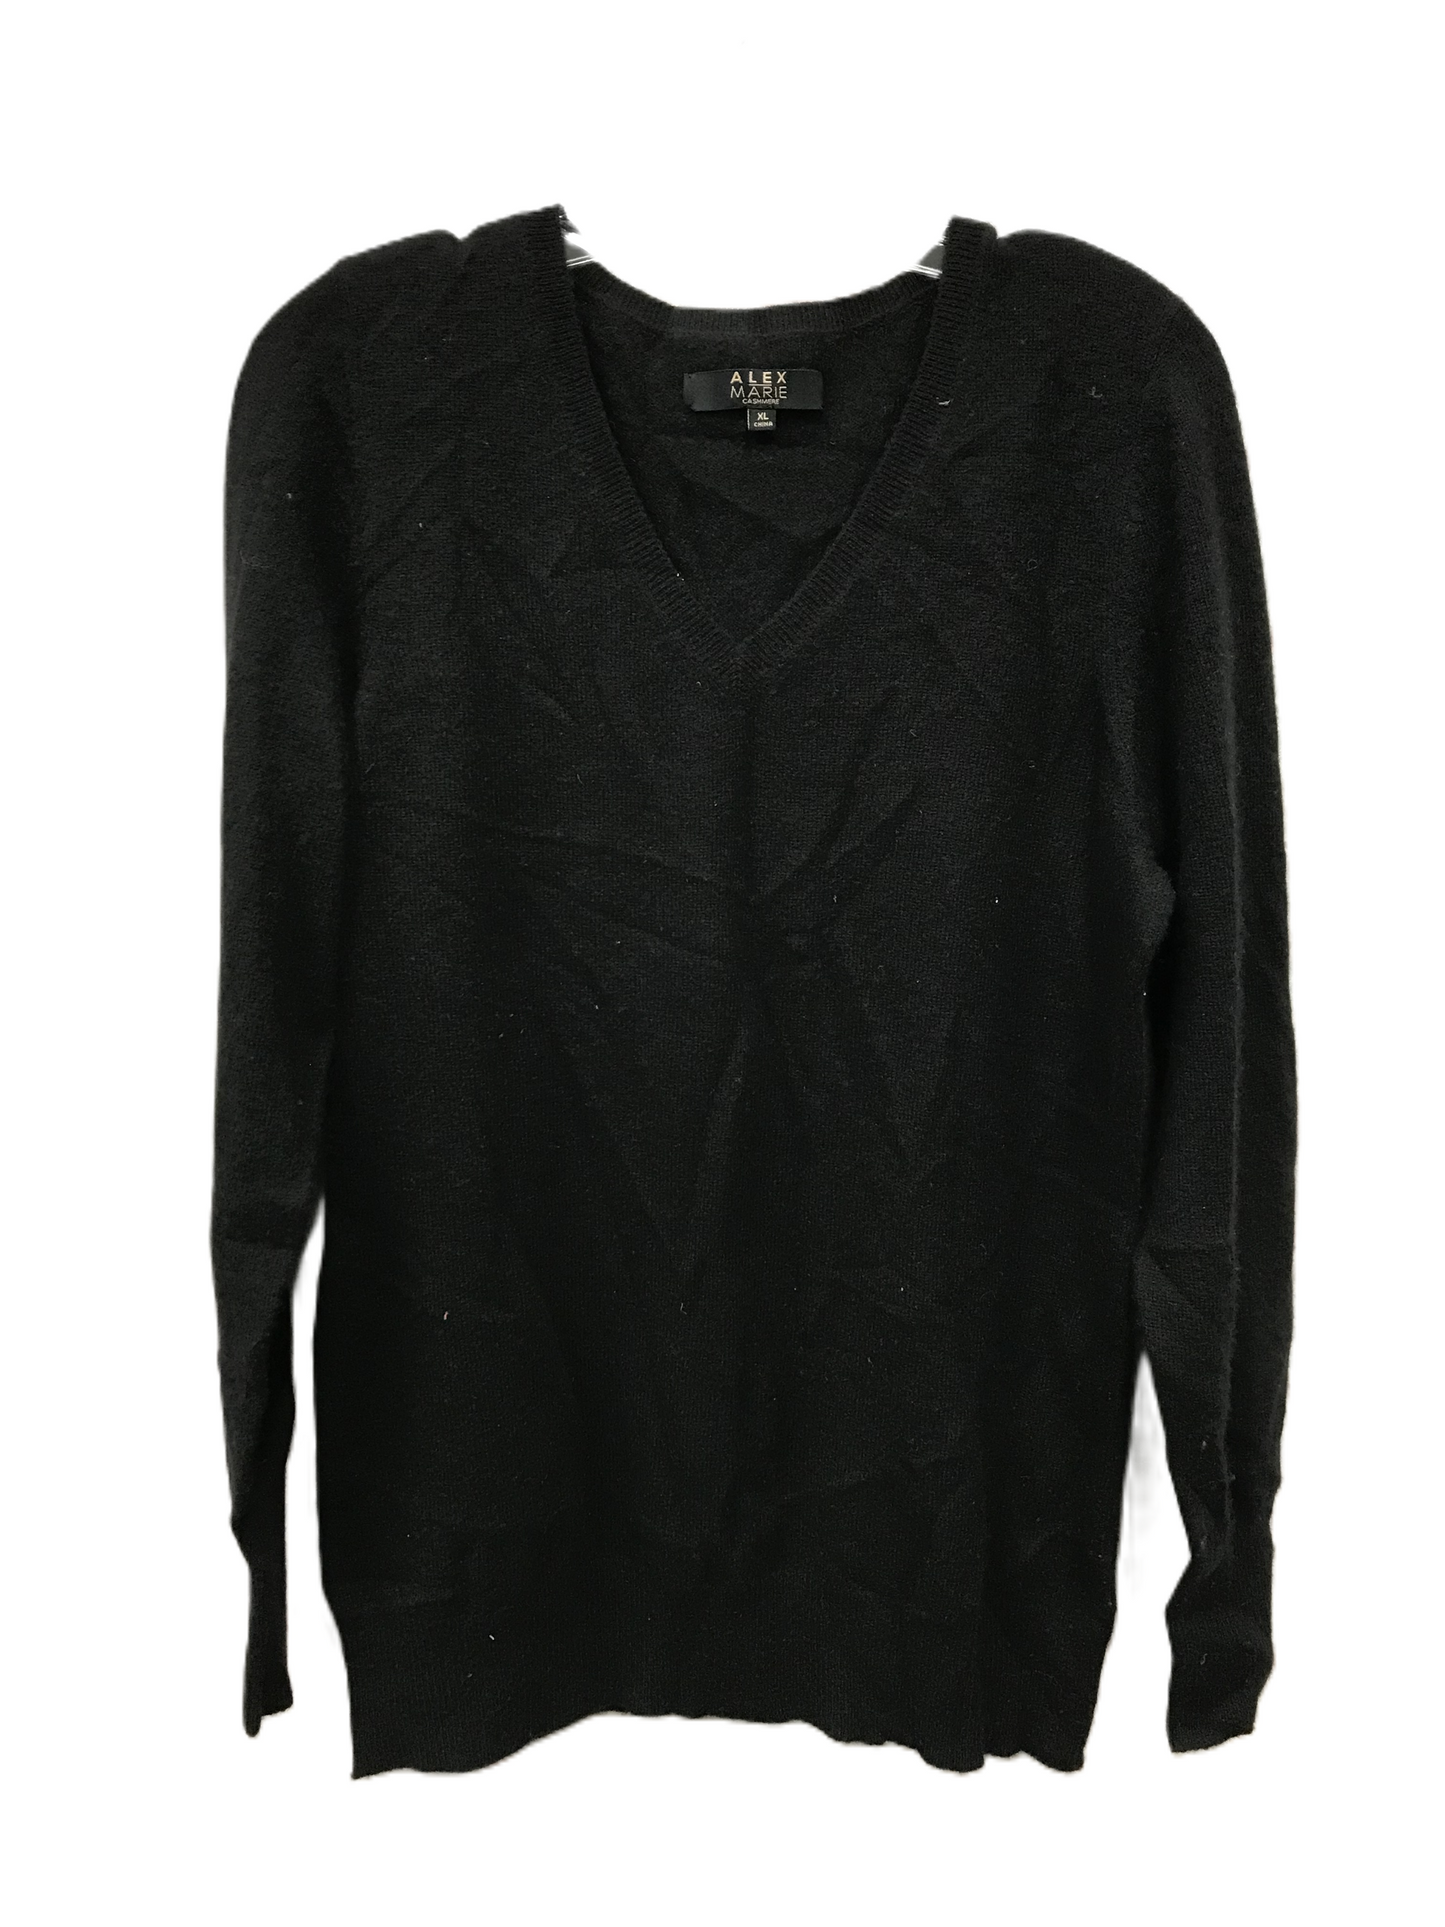 Black Sweater Cashmere By Alex Marie, Size: Xl